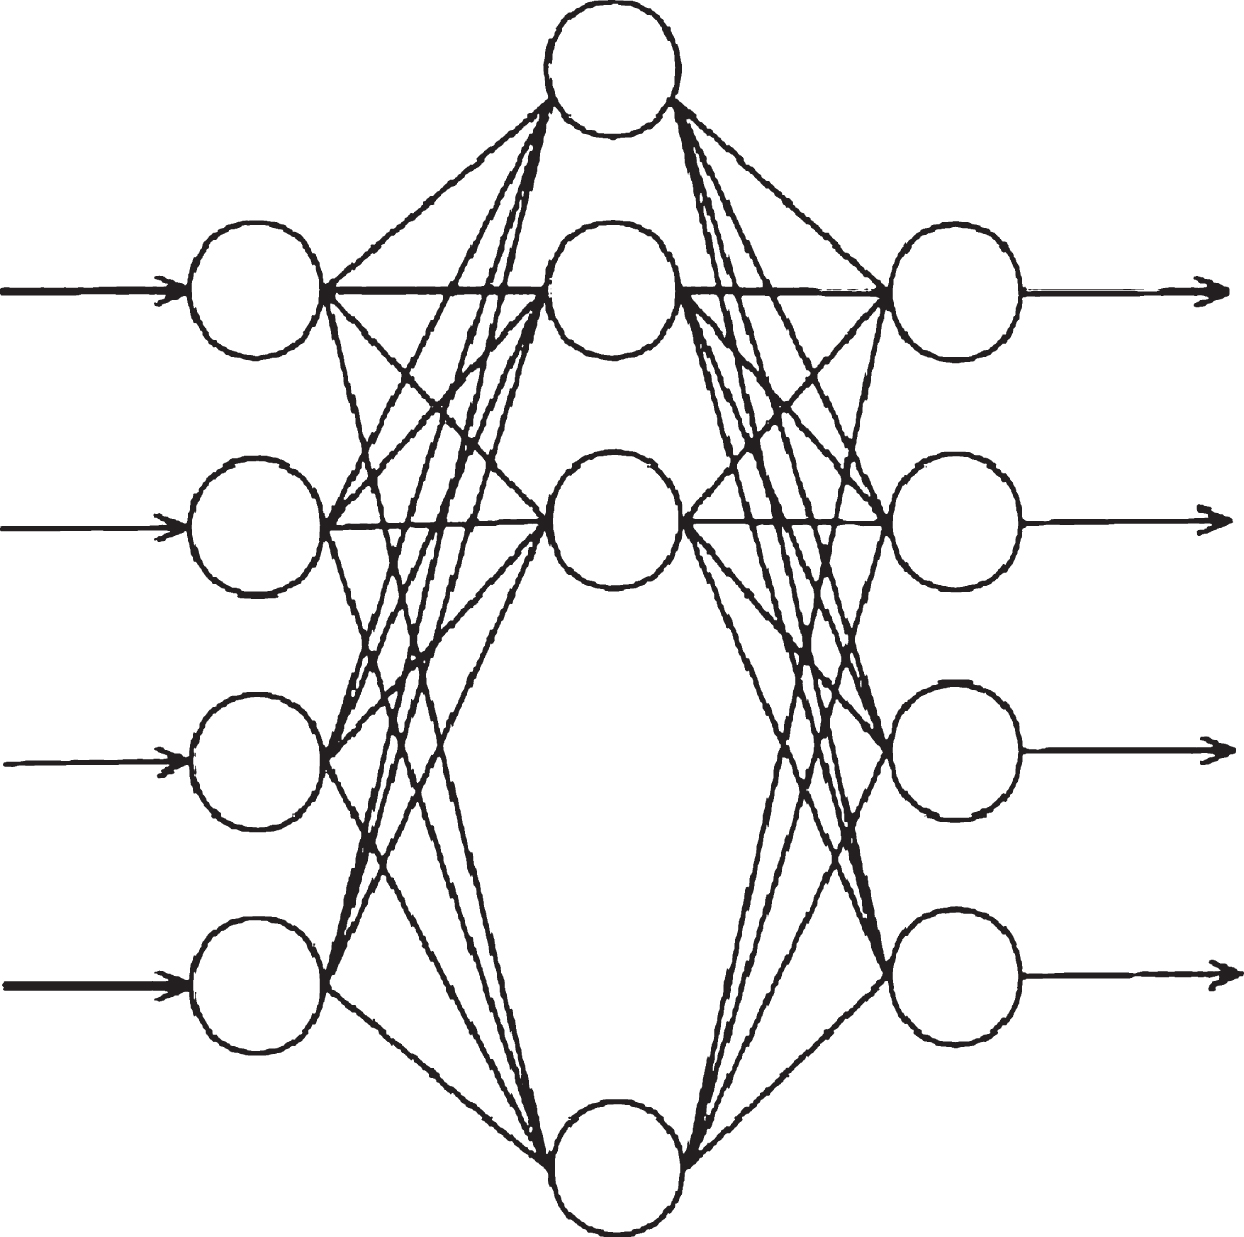 BP neural network structure.